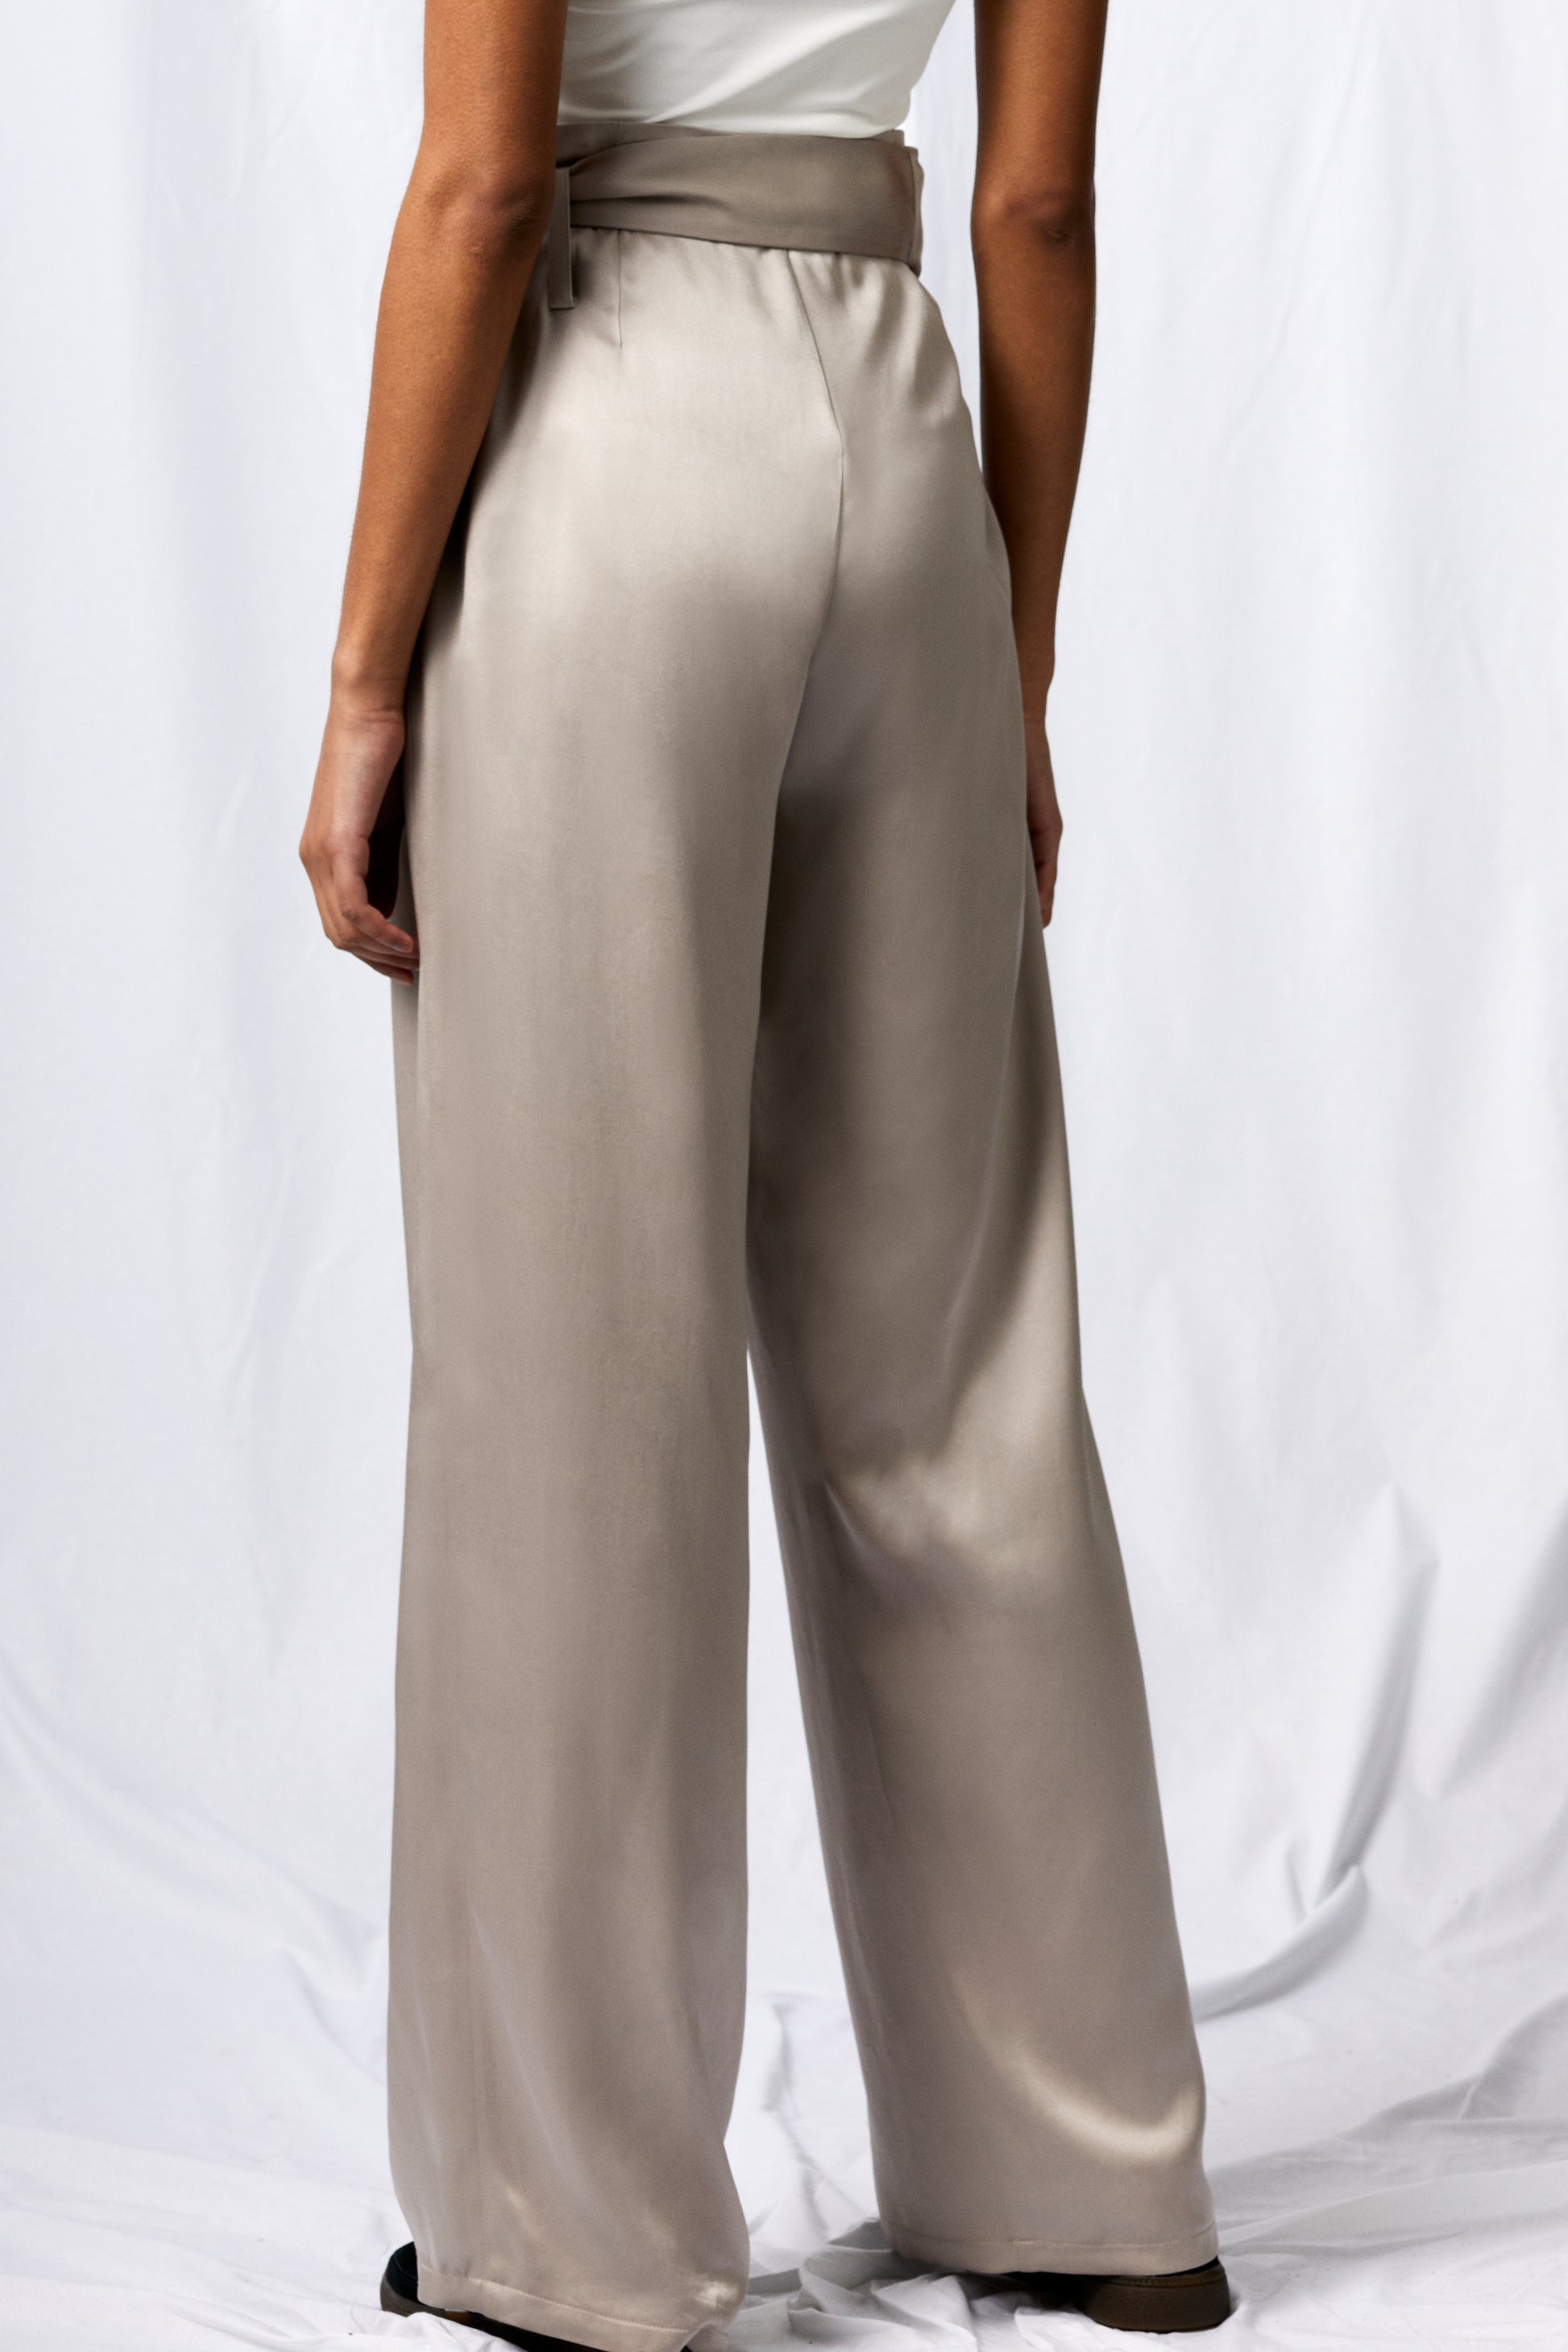 silk pants on white background